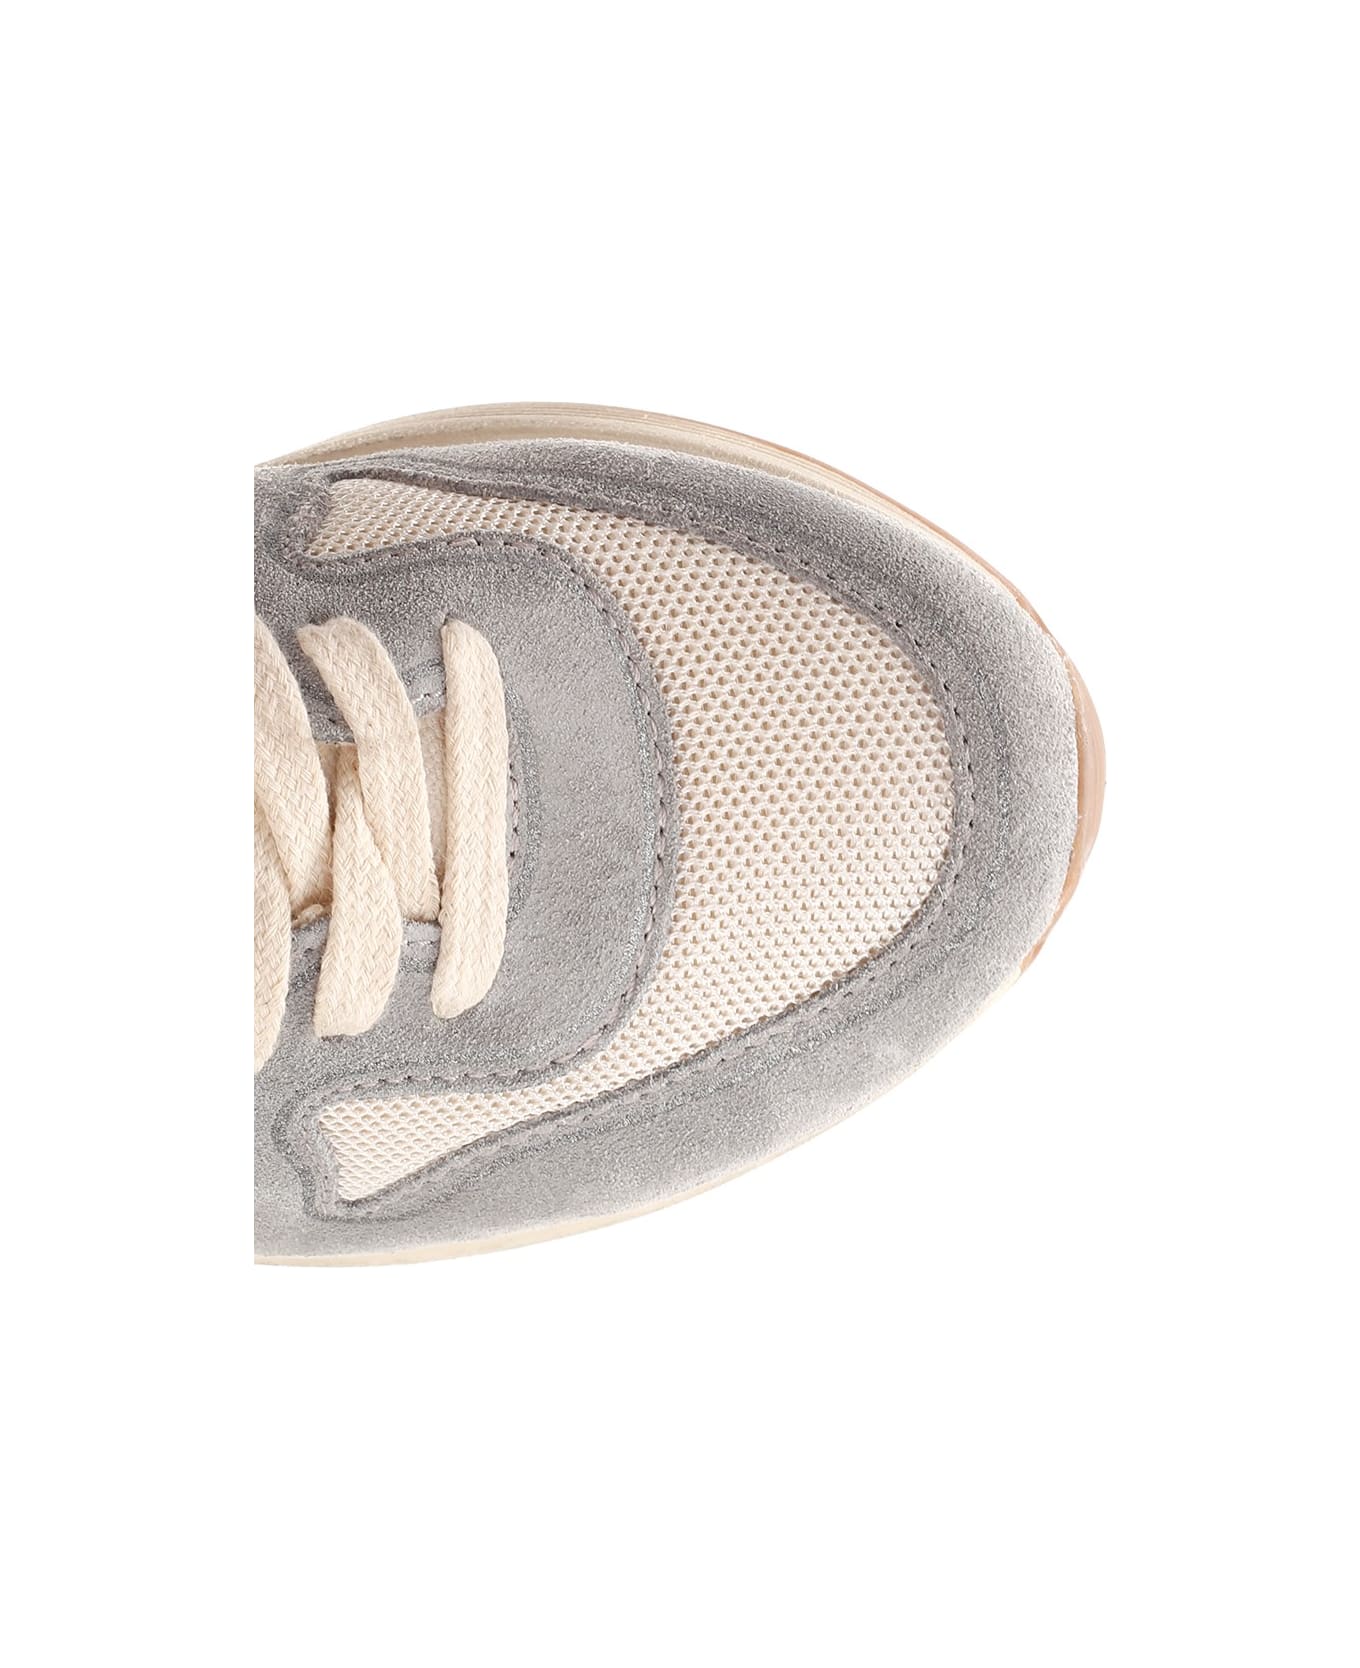 Golden Goose Running Sole Sneakers - Silver/White/Cream/Smoke Grey/Silver スニーカー